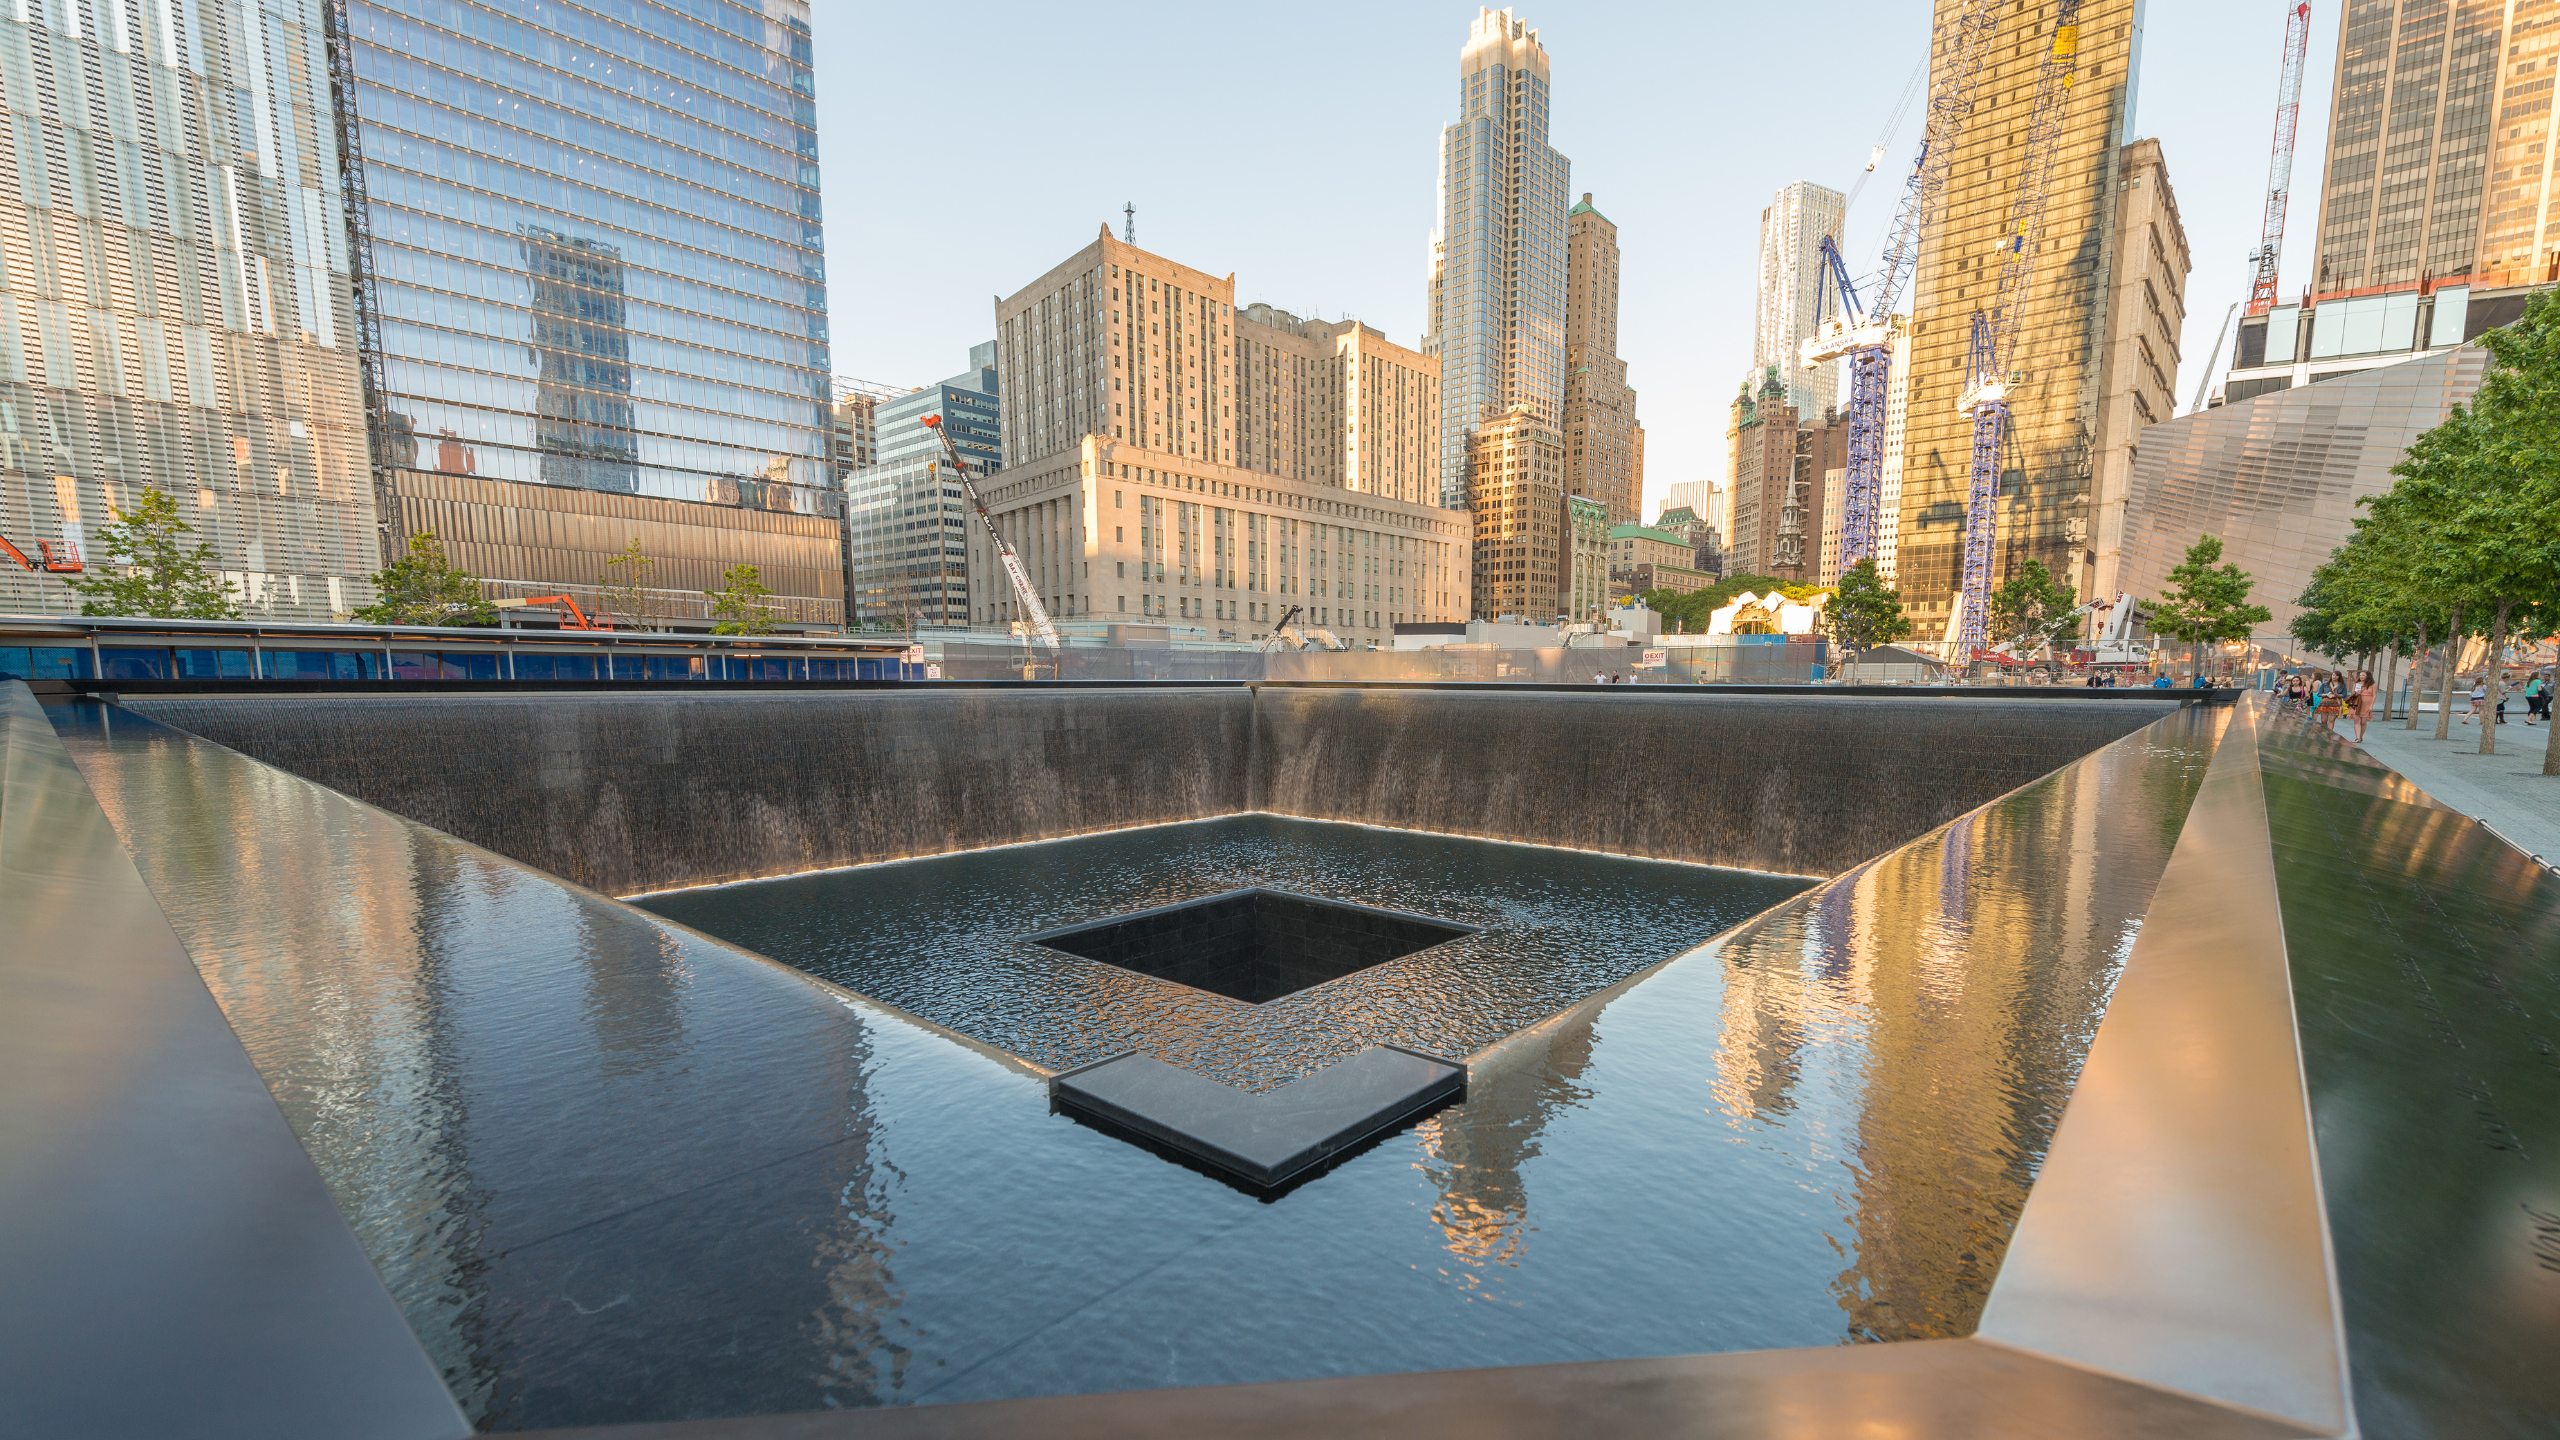 The 9/11 Memorial in Manhattan is a dark tourism site